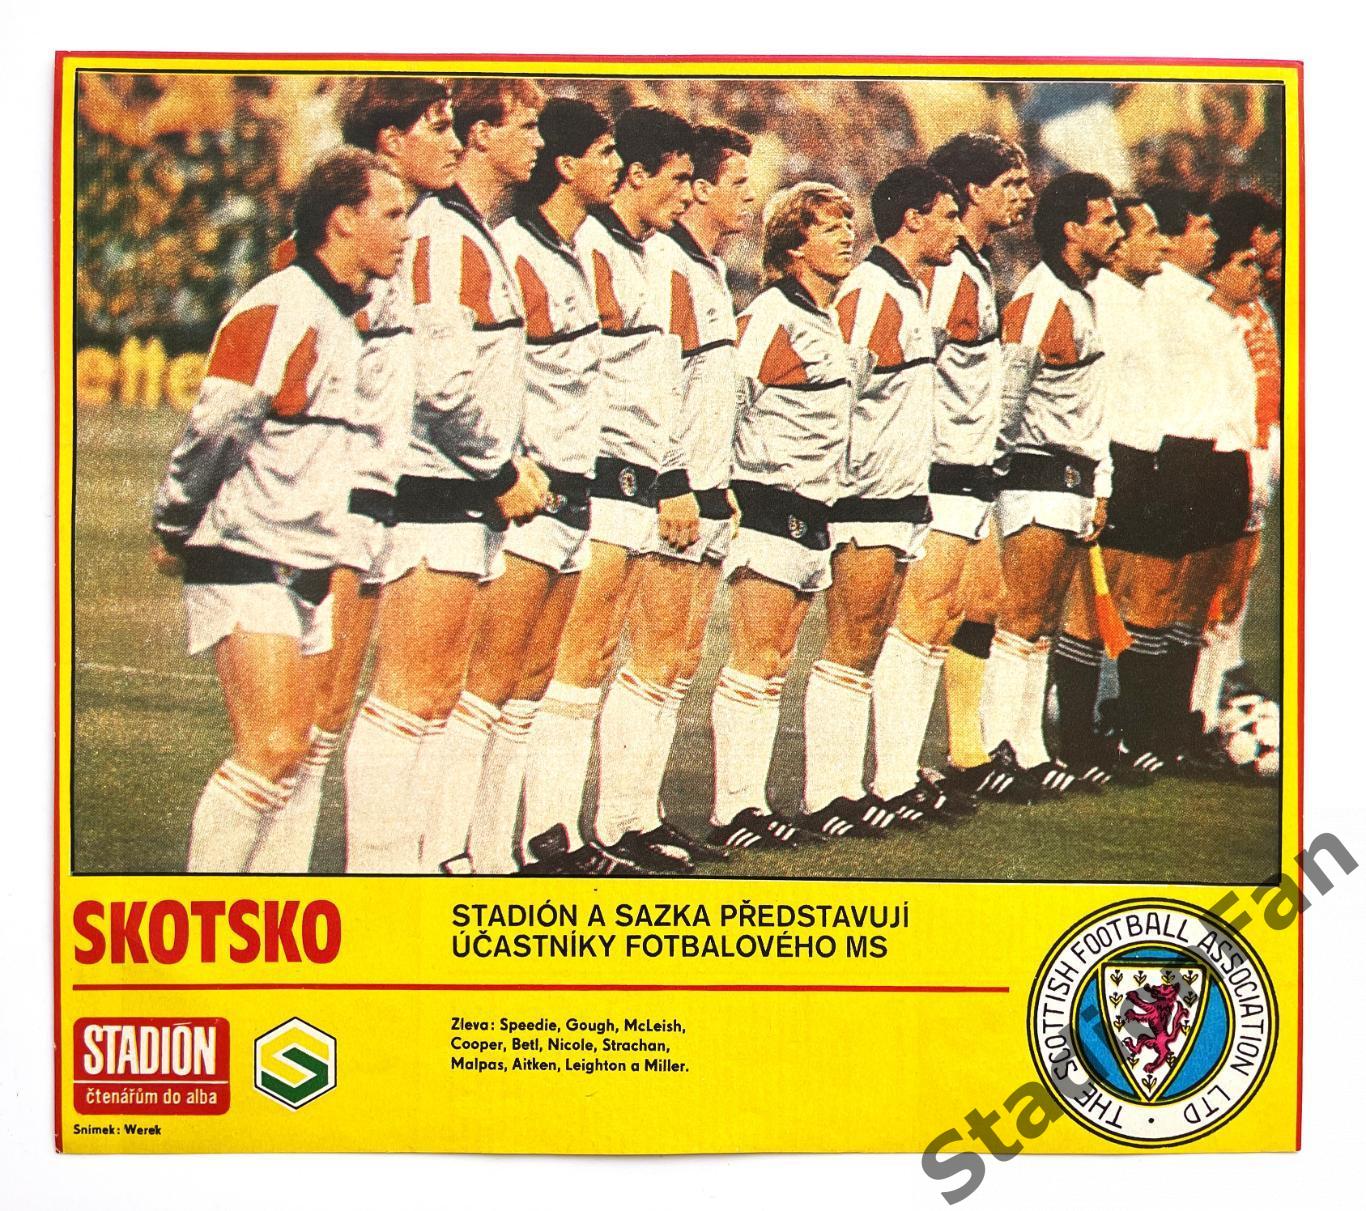 Постер из журнала Стадион (Stadion) - Skotsko, 1986